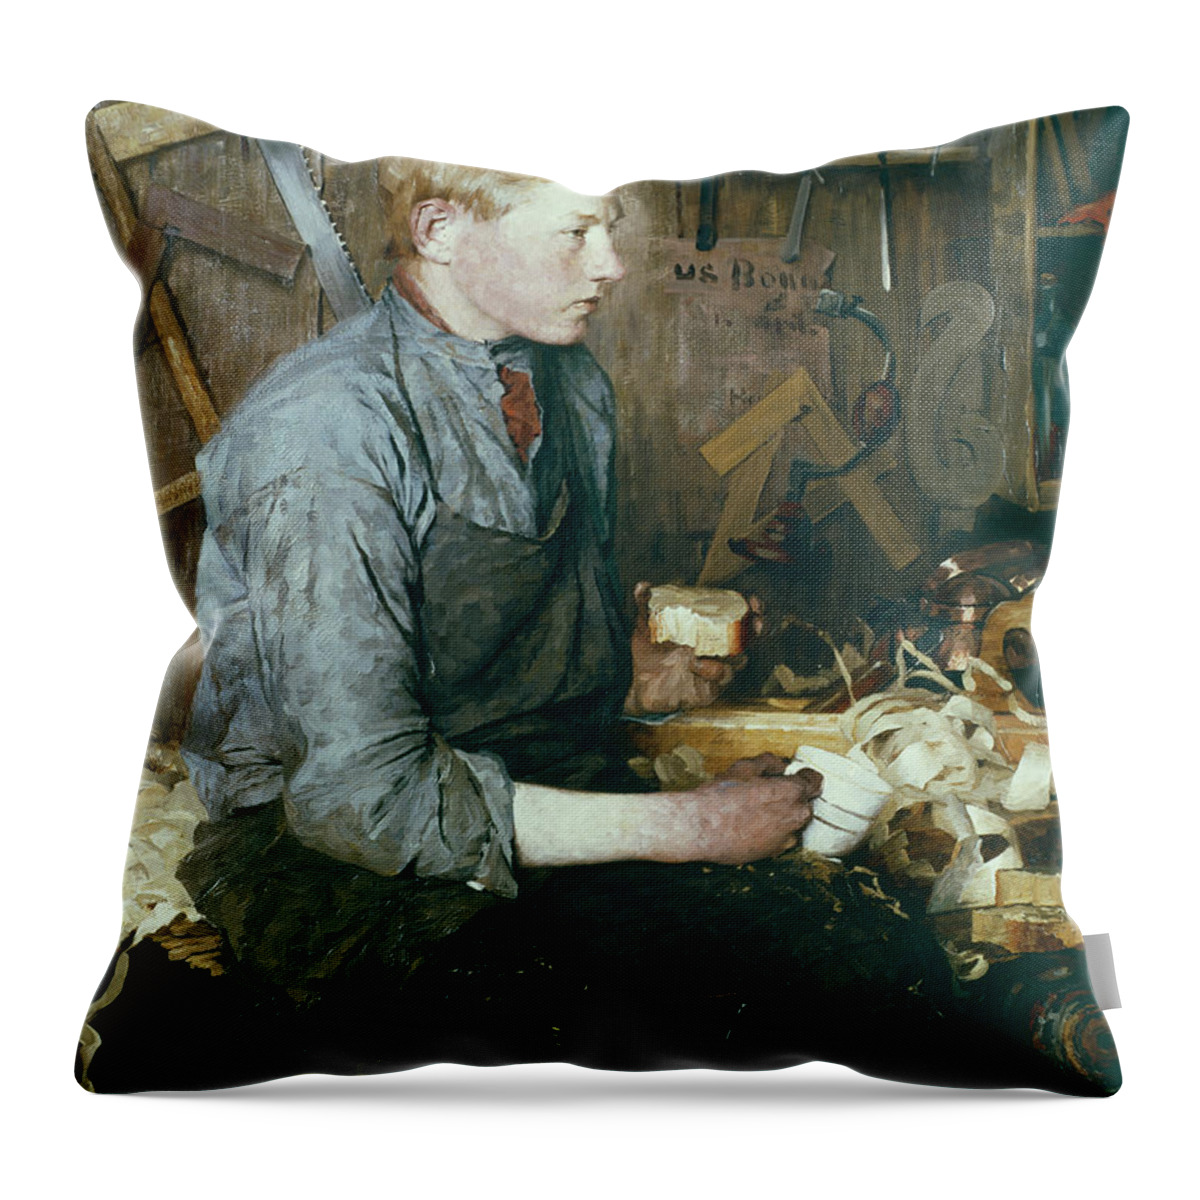 Fredrik Kolstoe Throw Pillow featuring the painting In the carpenters workroom by O Vaering by Fredrik Kolstoe